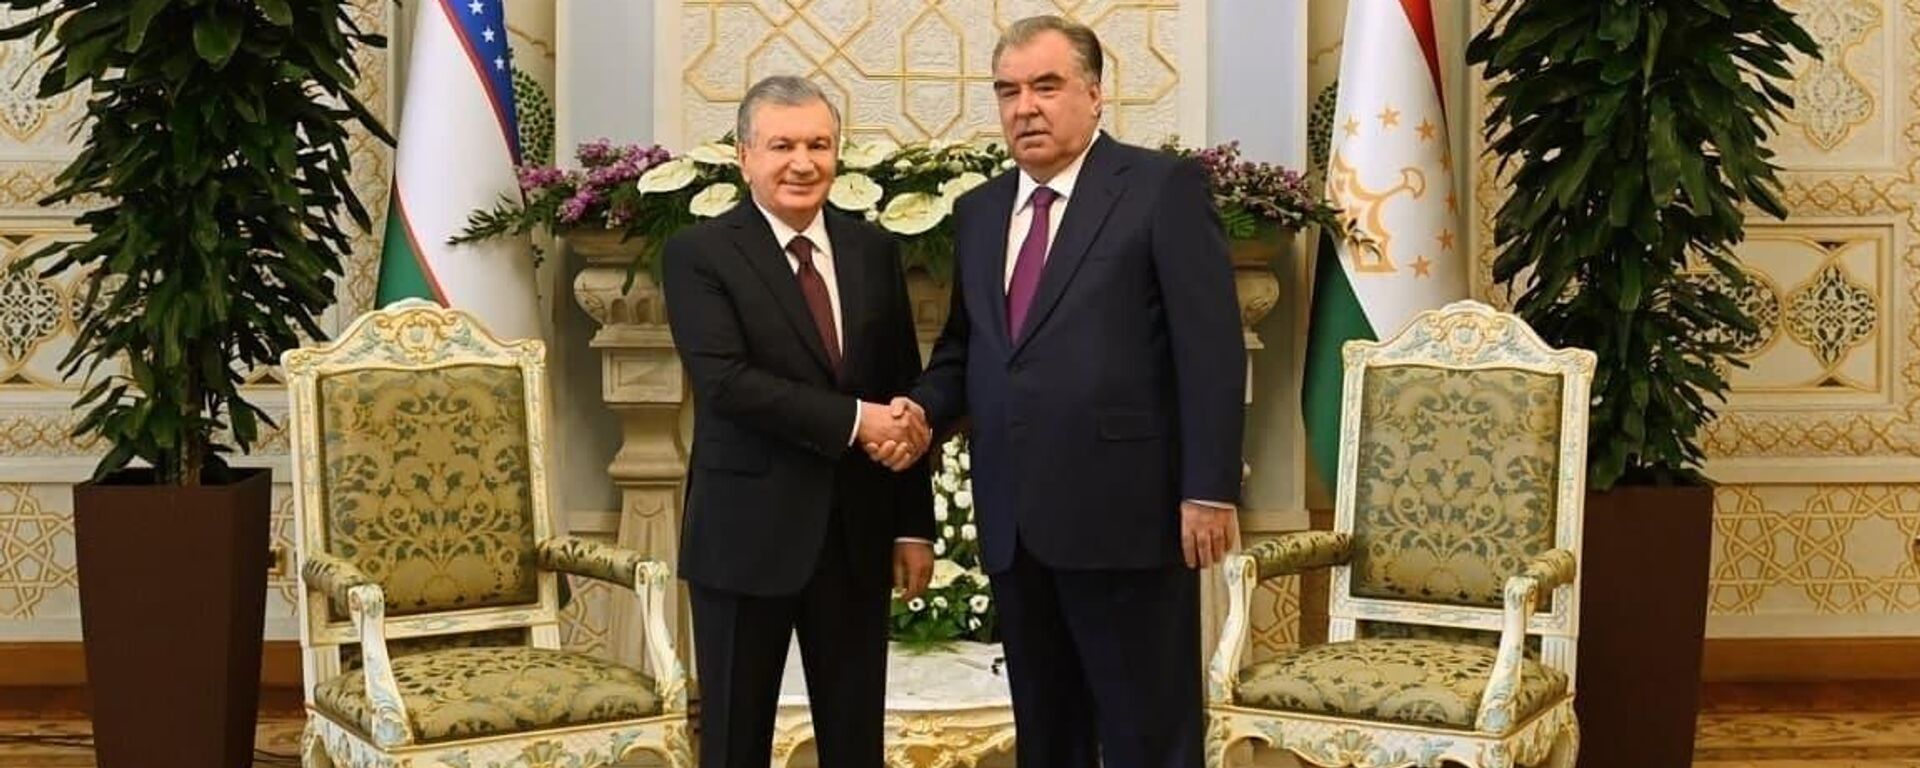 Президенты Узбекистана и Таджикистана Шавкат Мирзиёев и Эмомали Рахмон - Sputnik Узбекистан, 1920, 10.06.2021